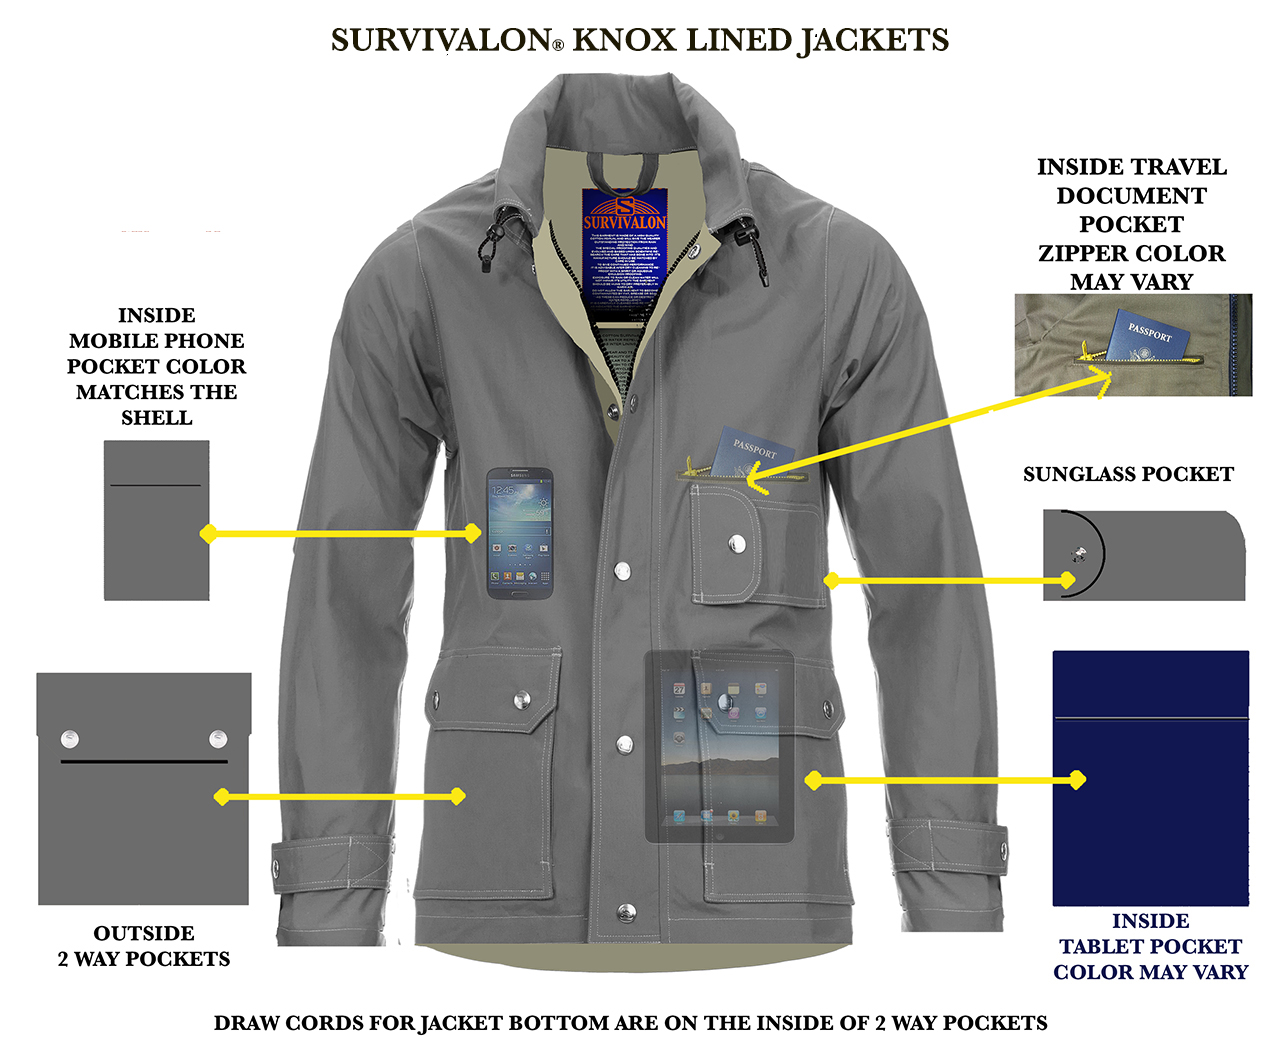 Knox jackets